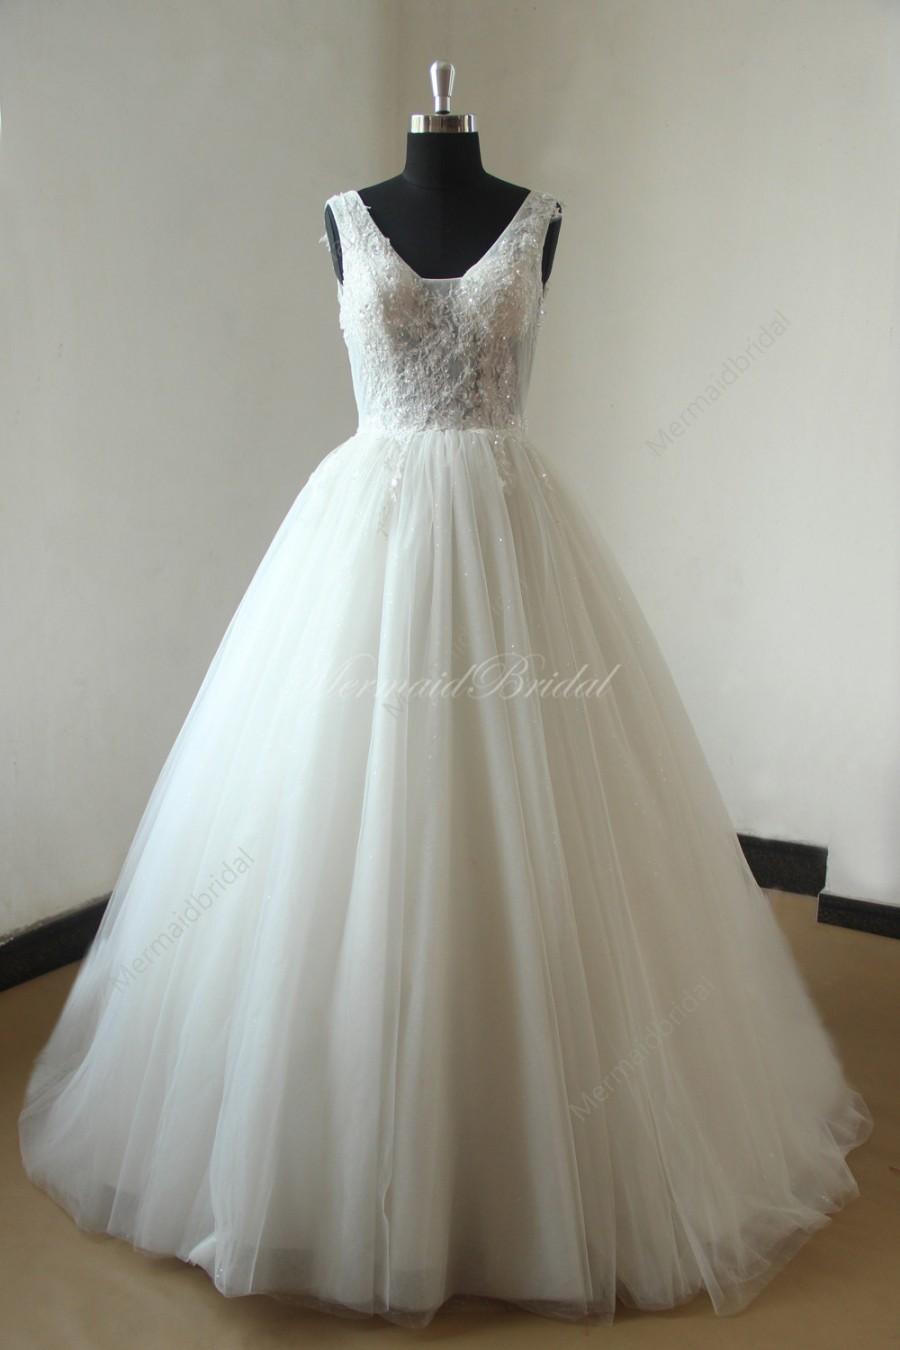 زفاف - Heavy beading ivory blingbling tulle ball gown lace wedding dress